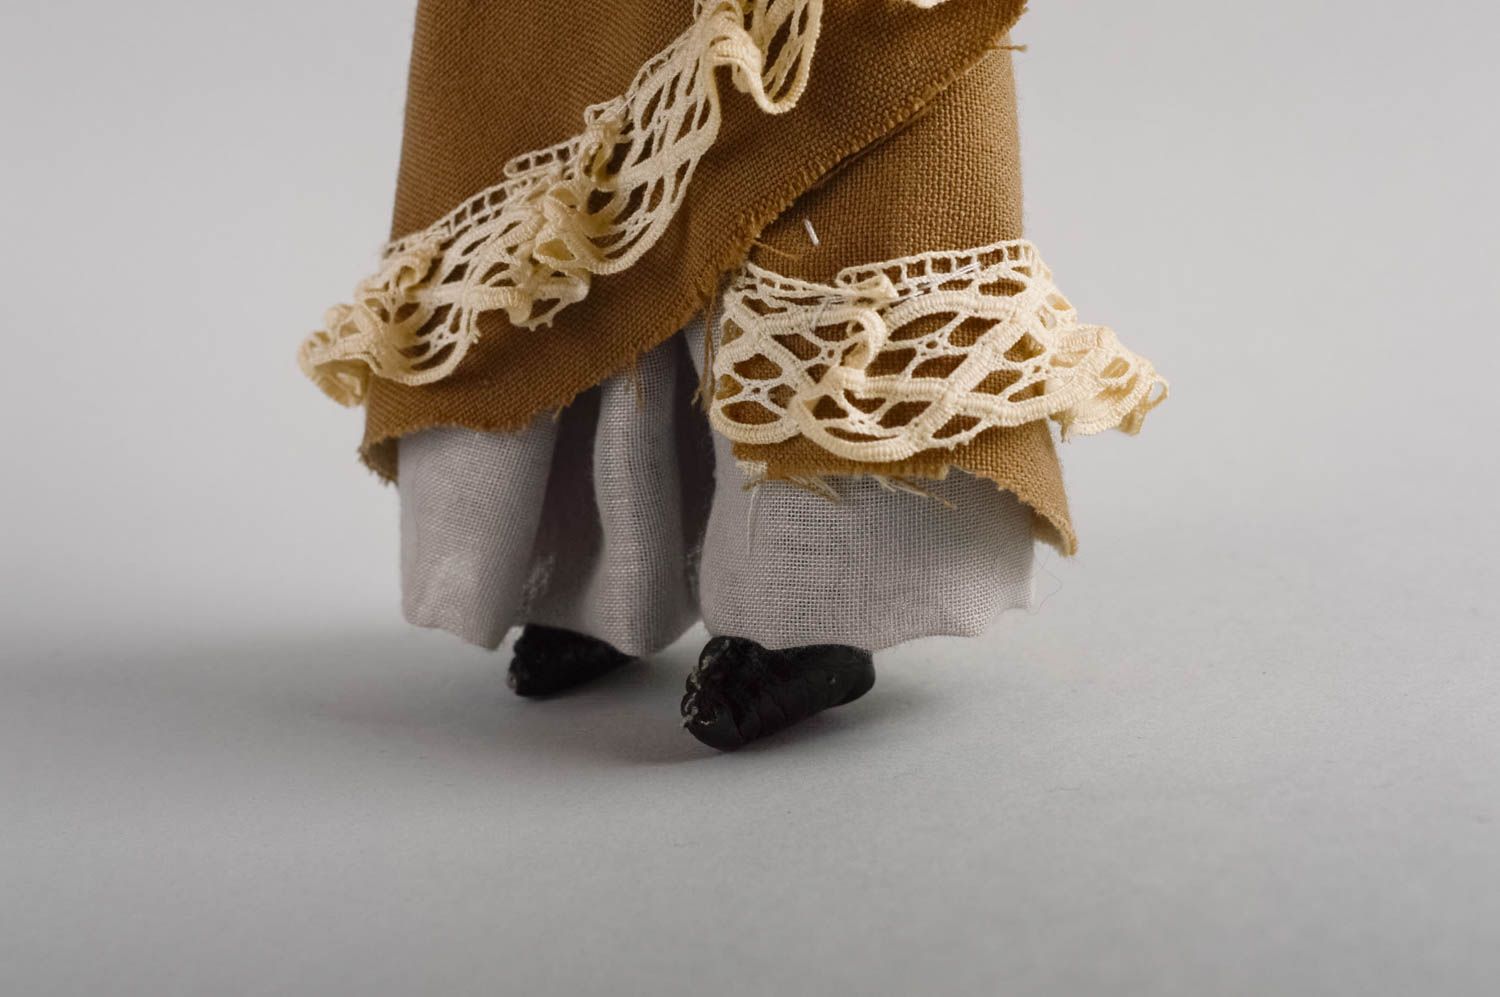 Handmade decorative rag doll for kids interior design and gift ideas  photo 5